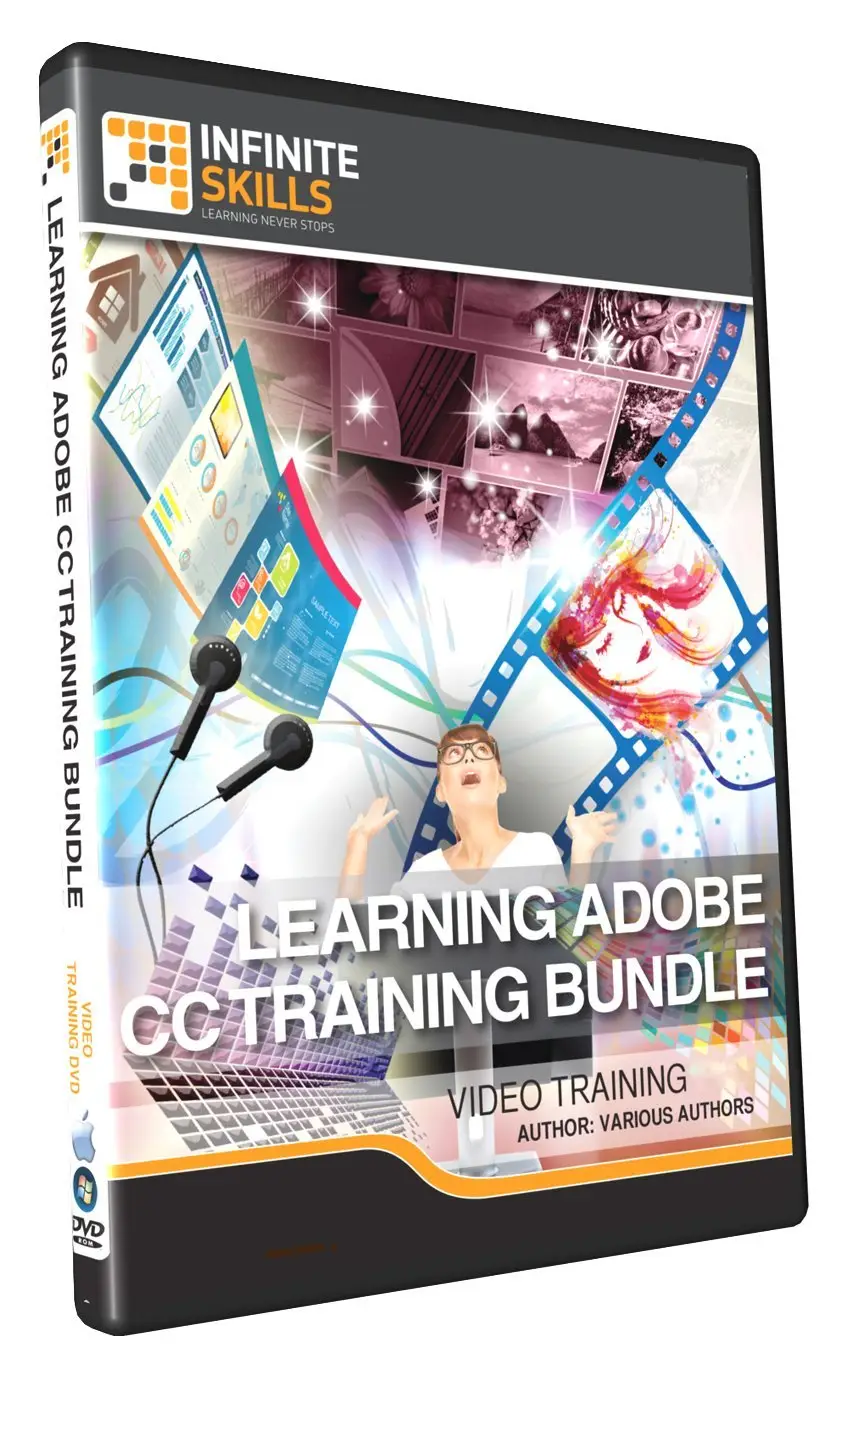 the complete adobe cc training bundle